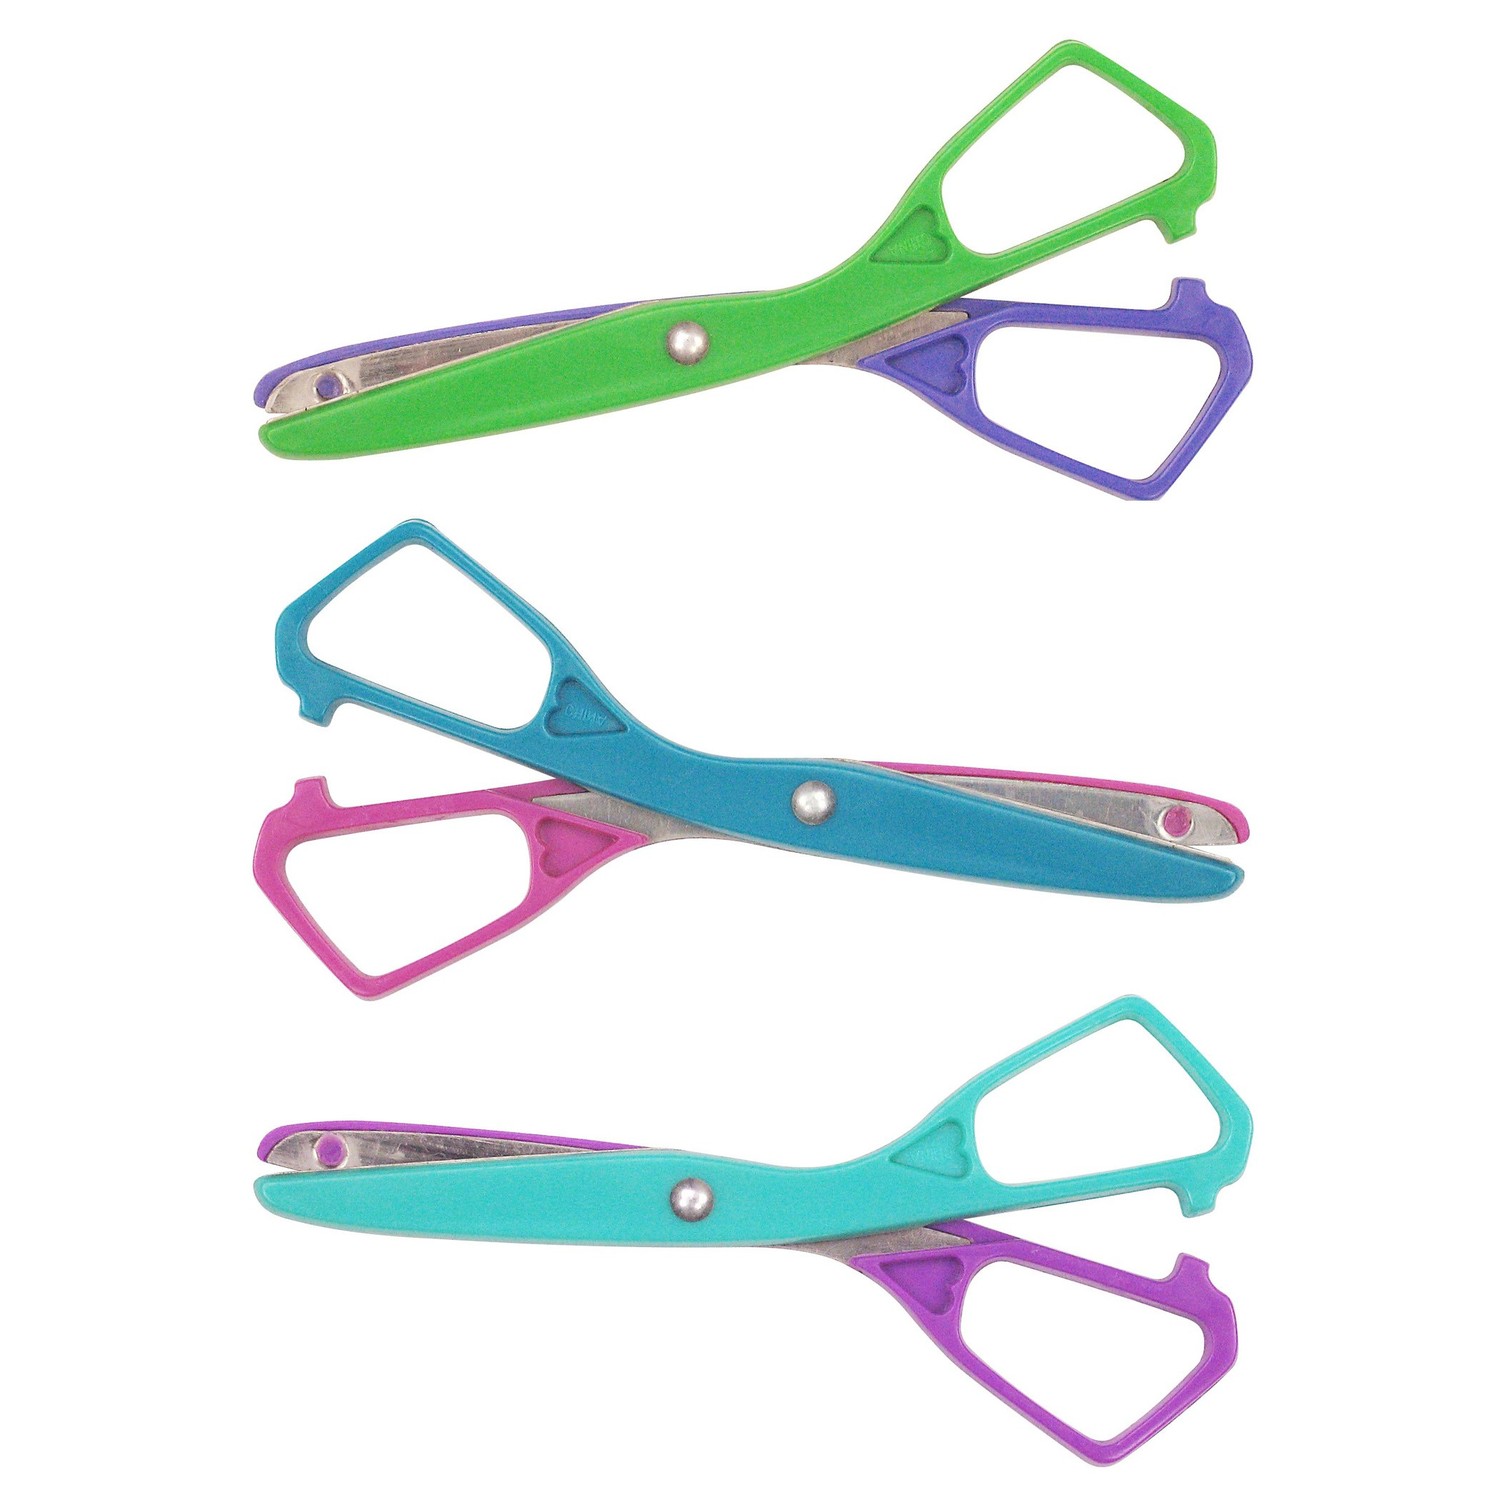 Economy Plastic Safety Scissor, 5-1/2" Blunt, Colors Vary